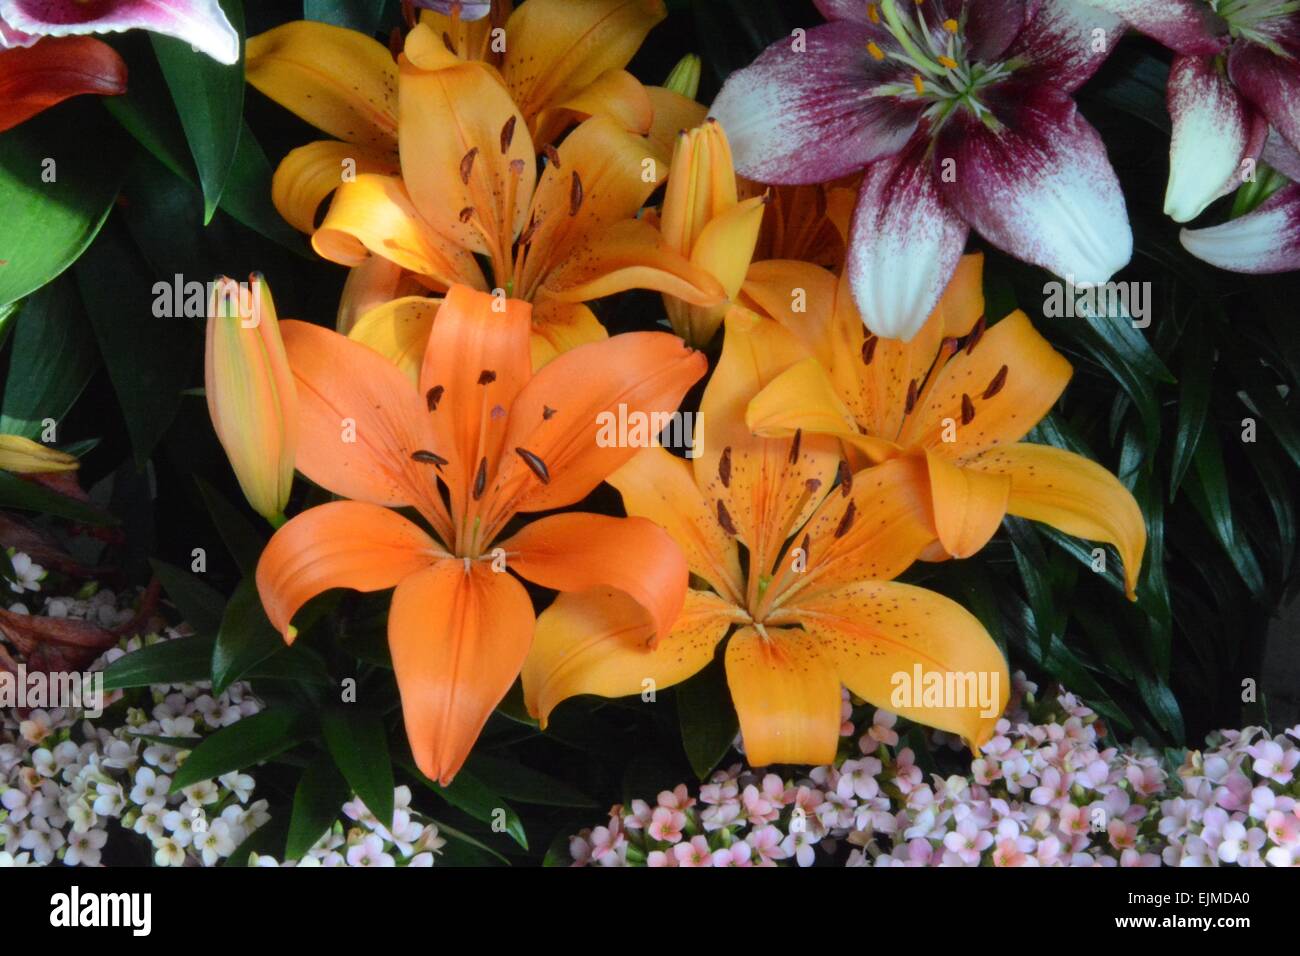 Orange Lilies Albuquerque, New Mexico - USA Stock Photo